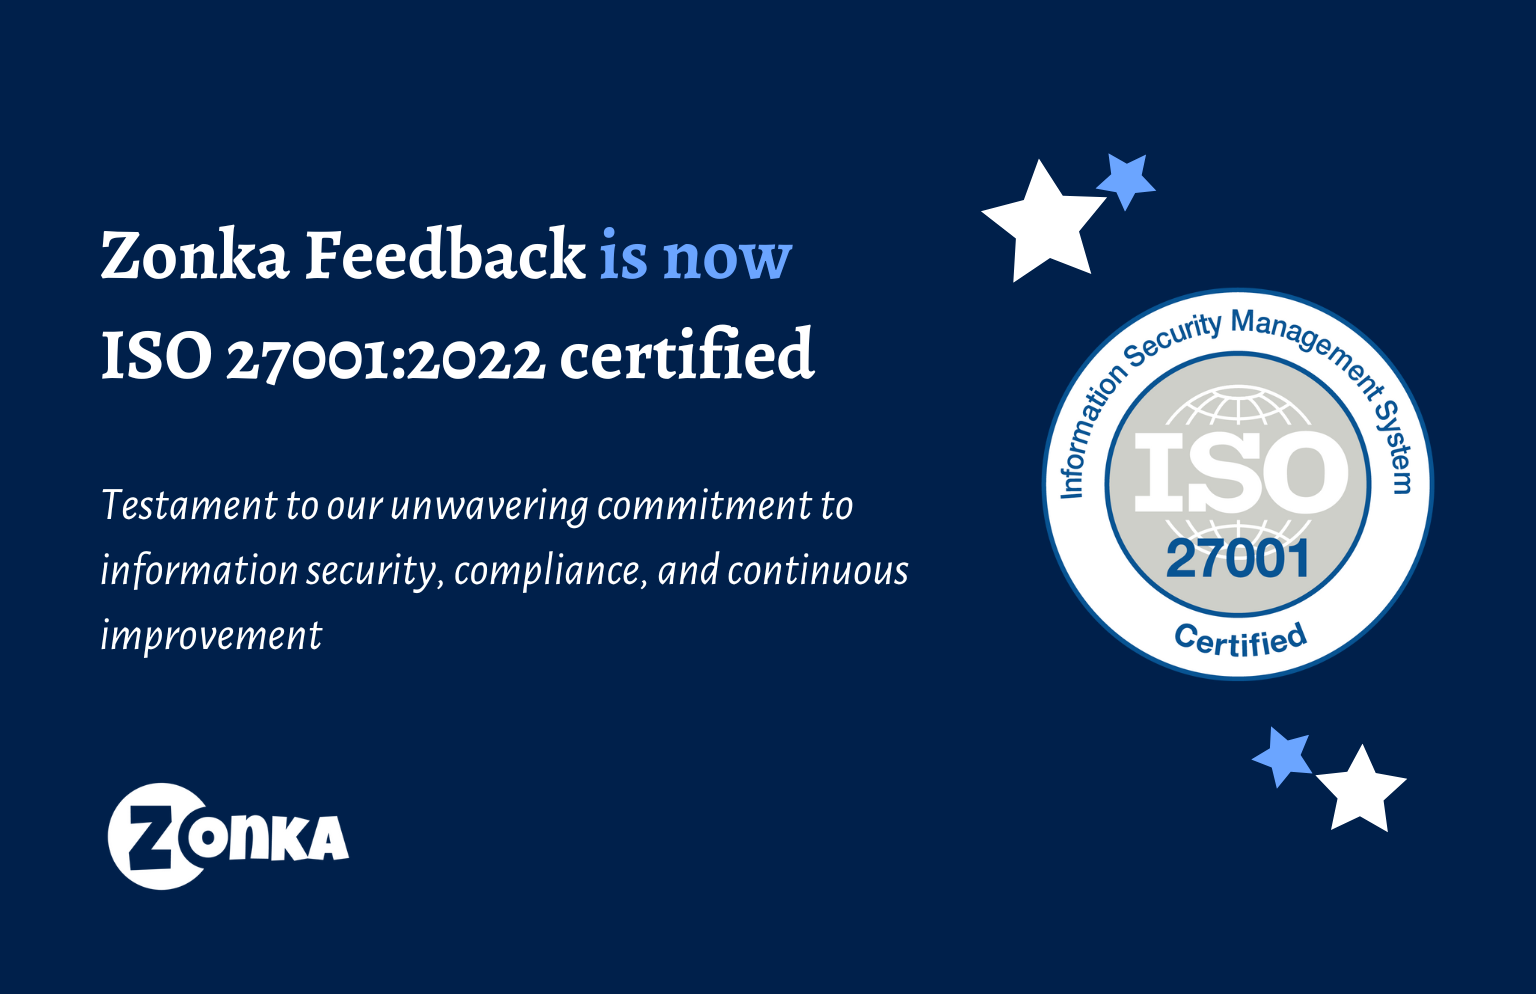 Zonka Feedback is now ISO 27001:2022 Certified